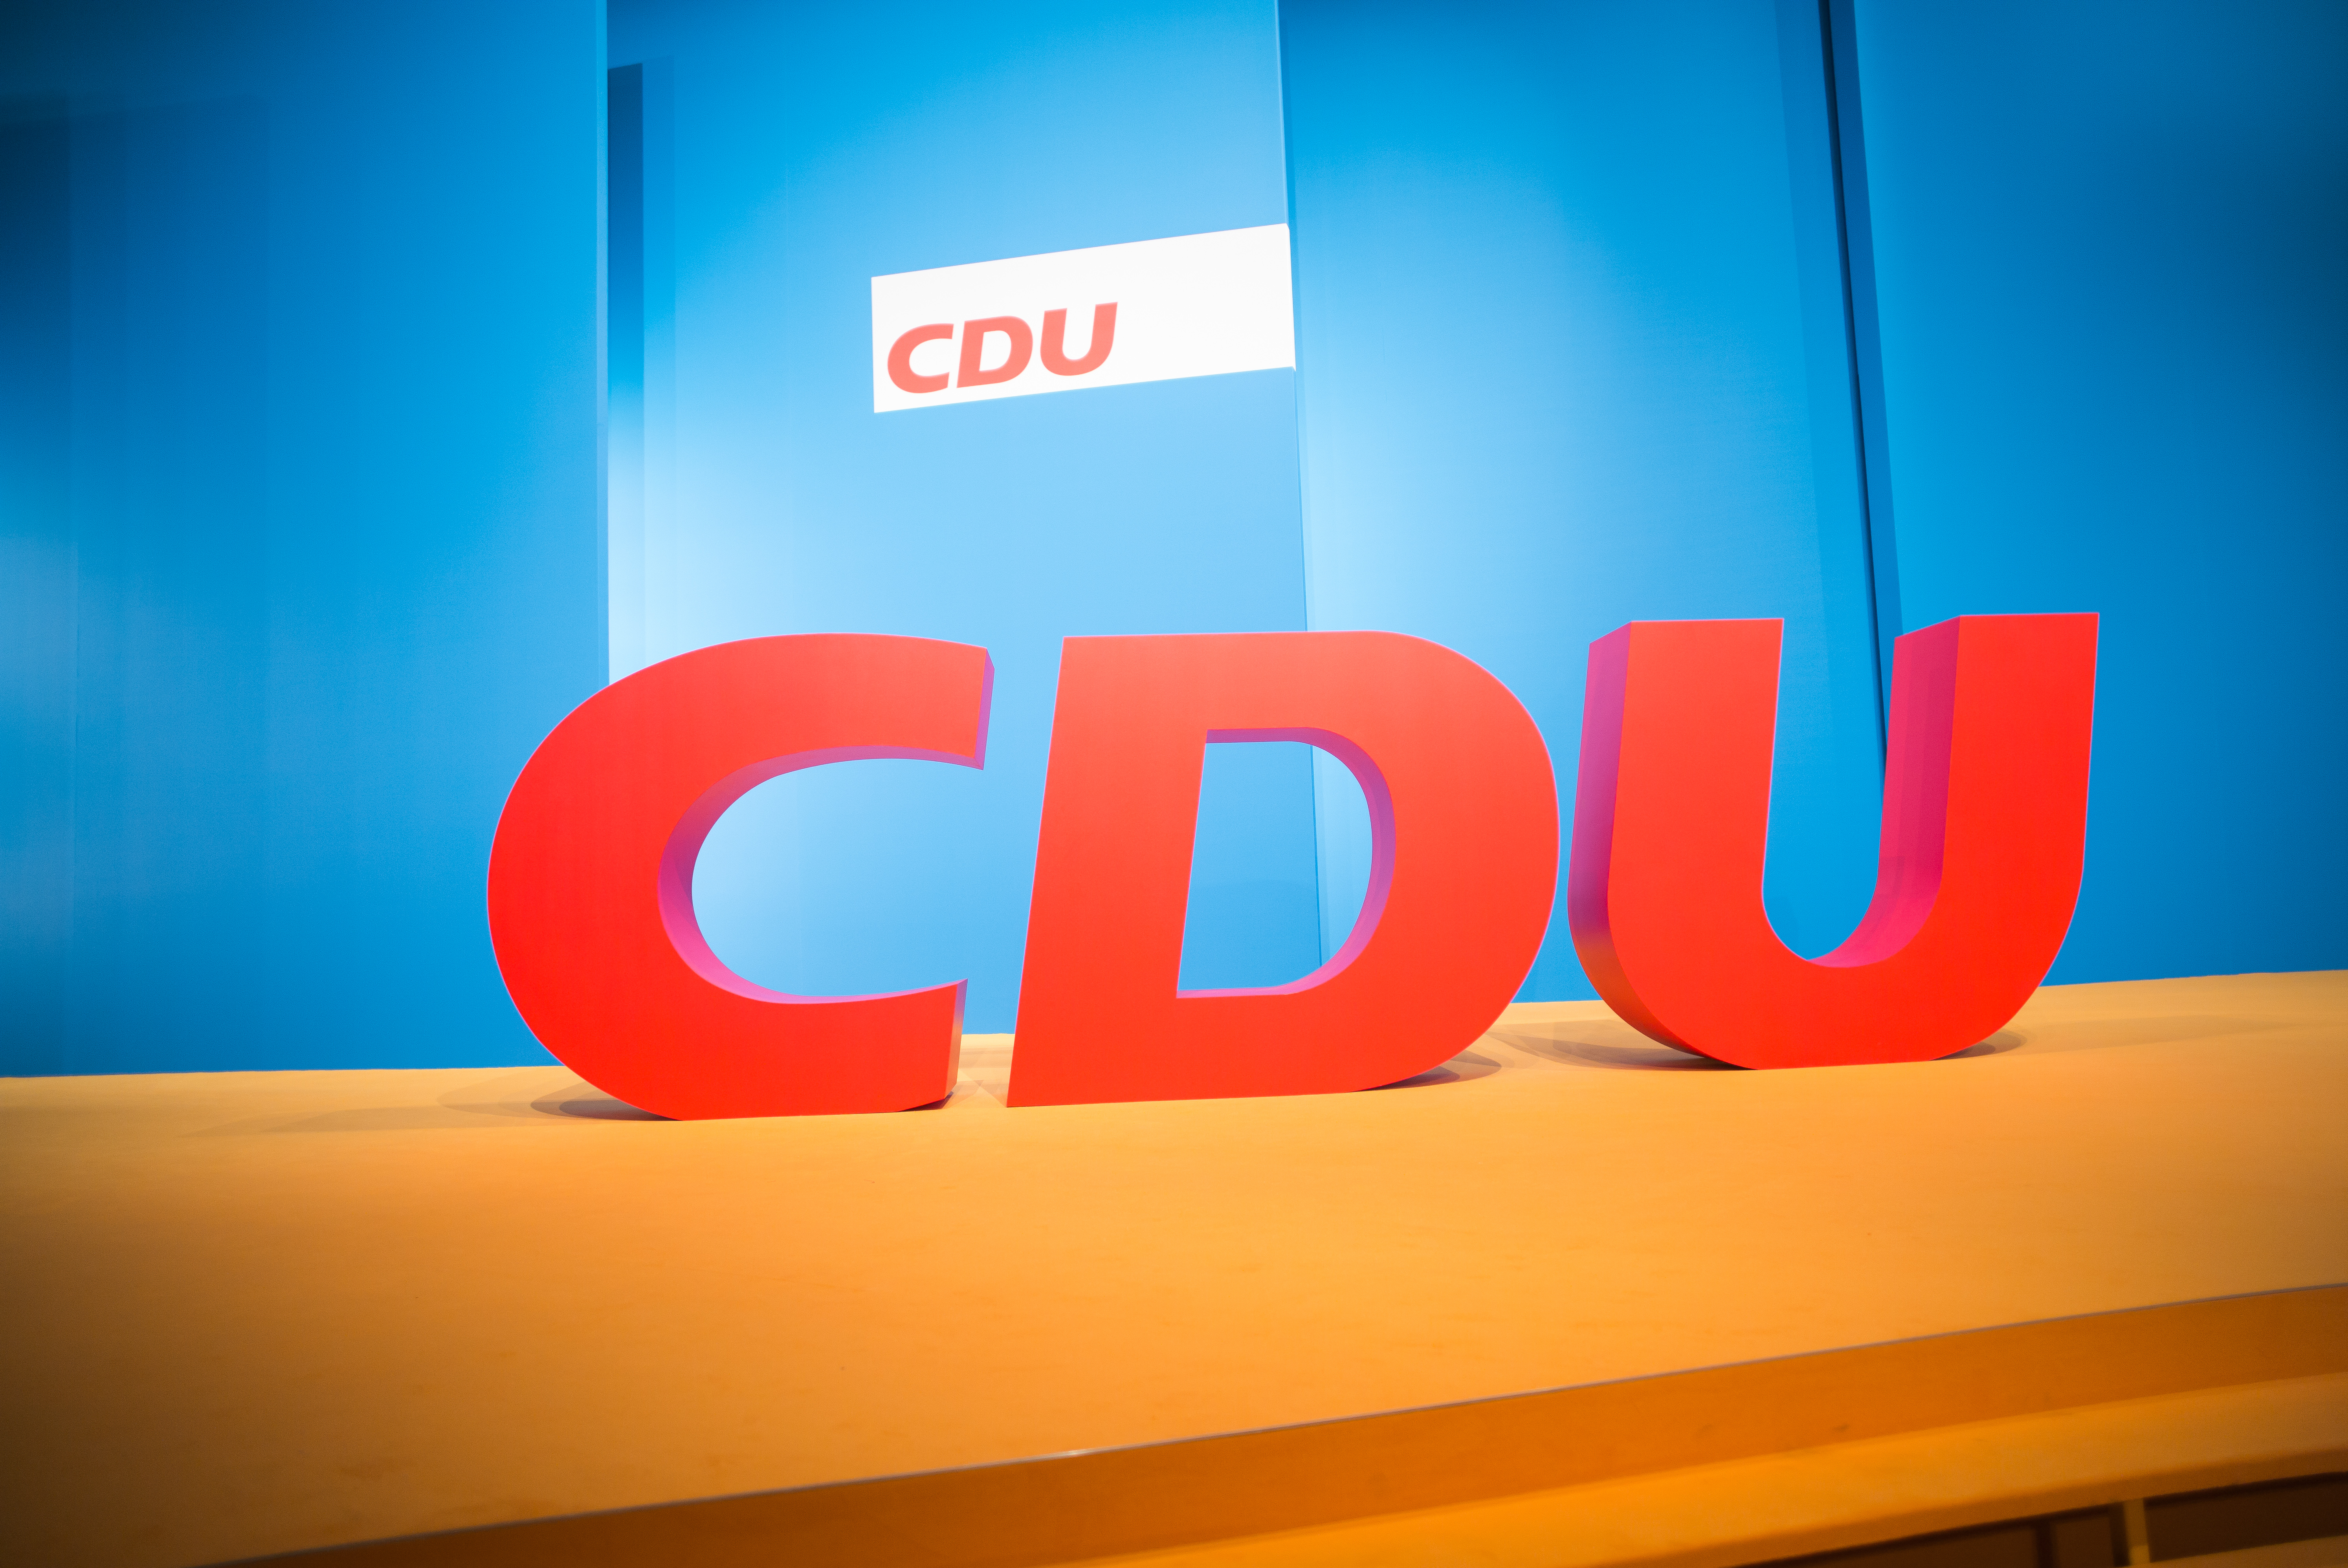 Copyright CDU / Markus Schwarze